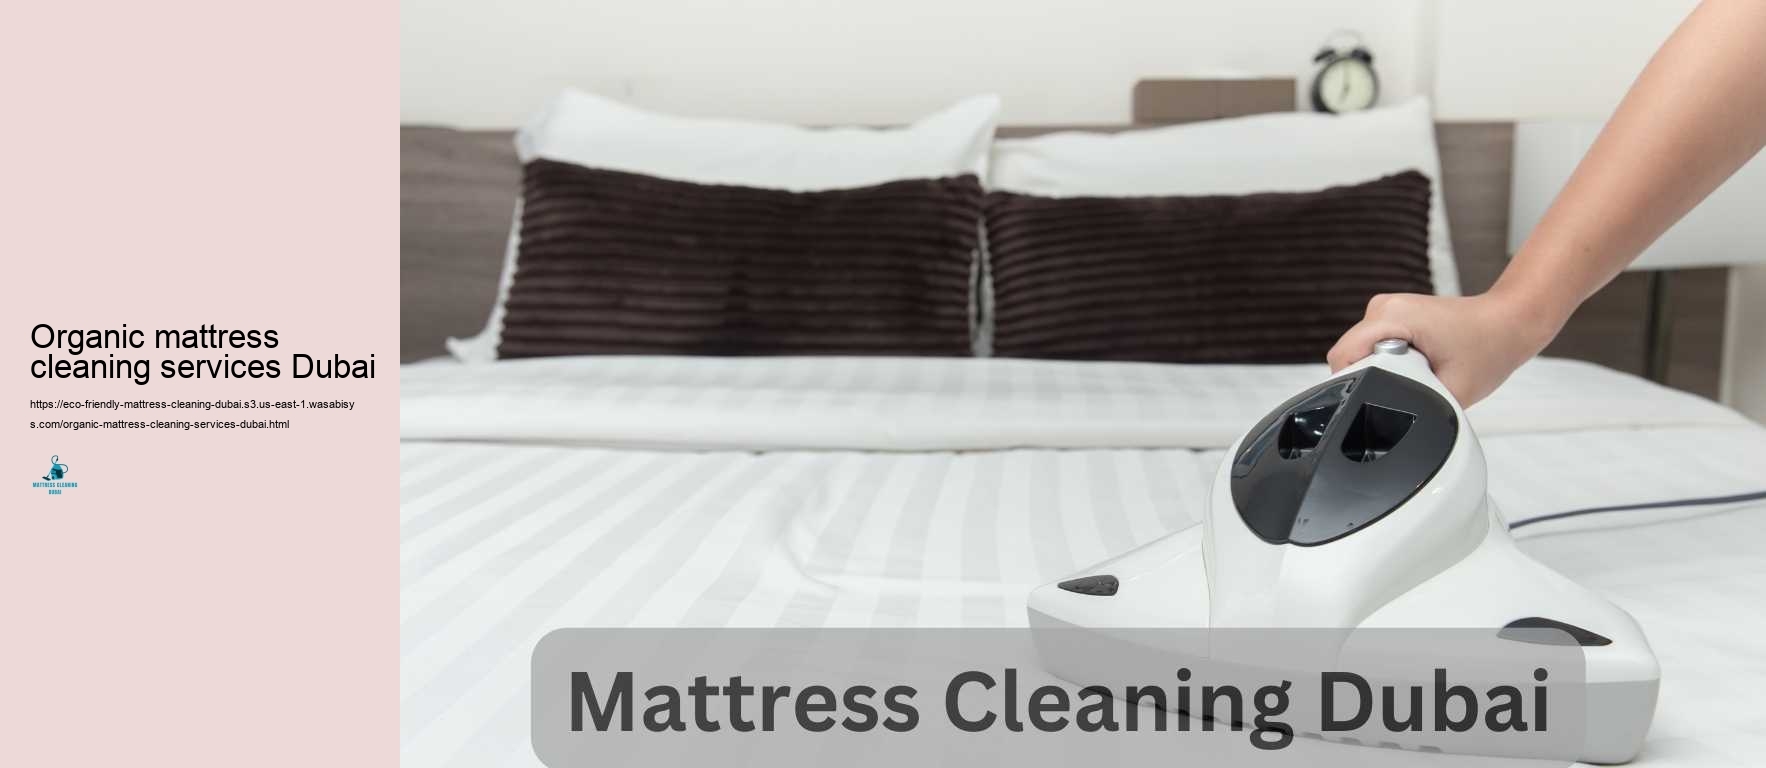 Organic mattress cleaning services Dubai